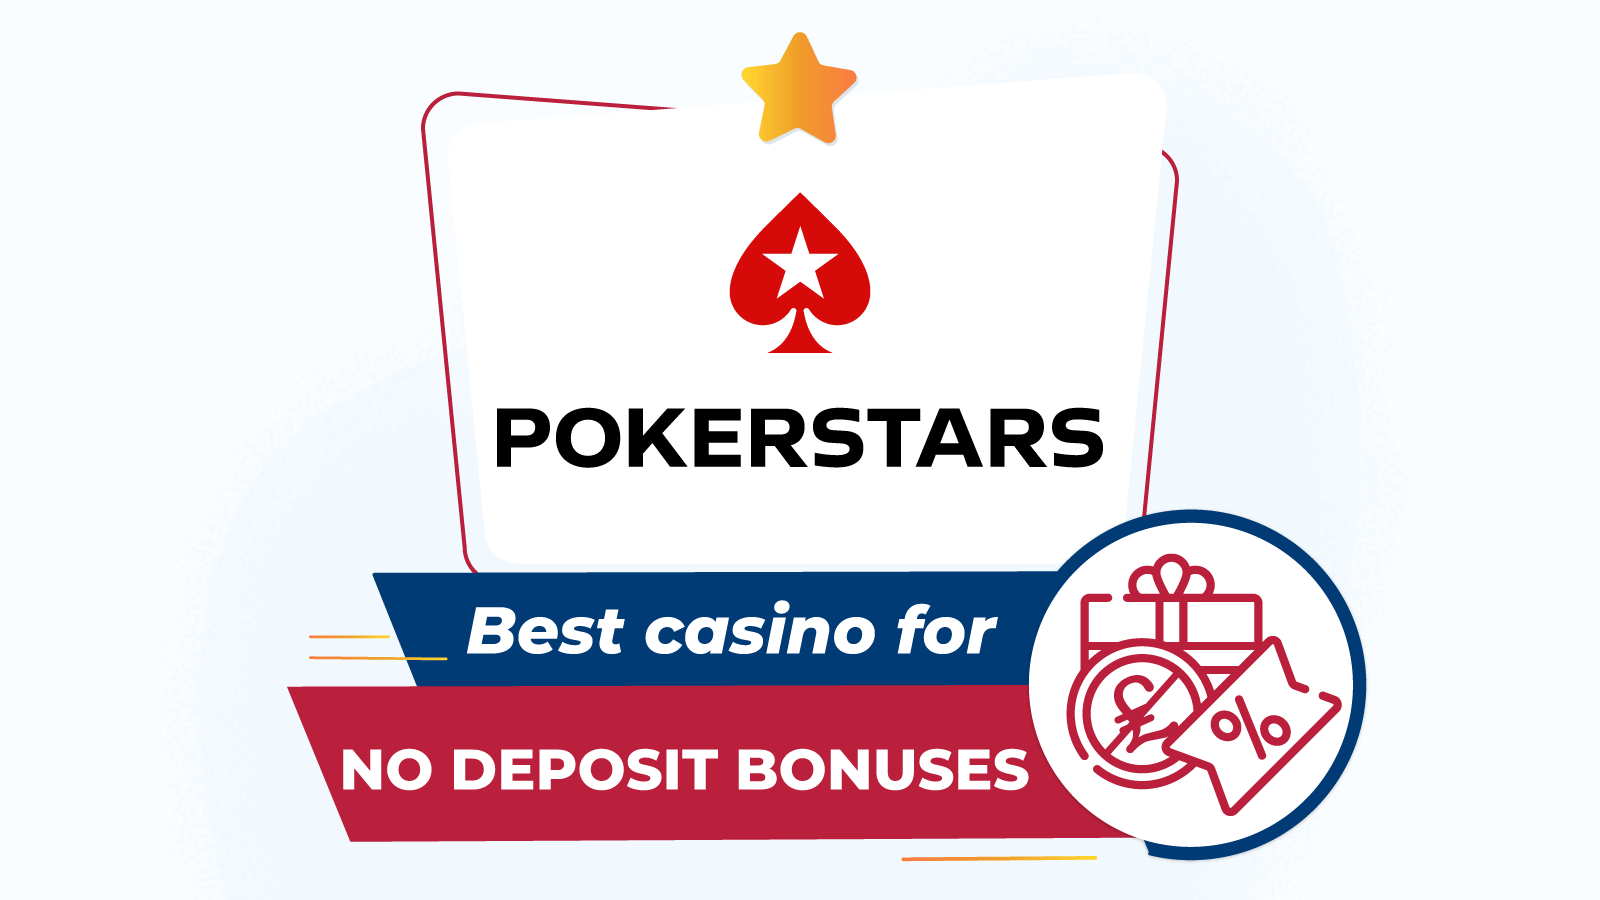 #3. PokerStars – Best Casino for Microgaming No Deposit Bonuses